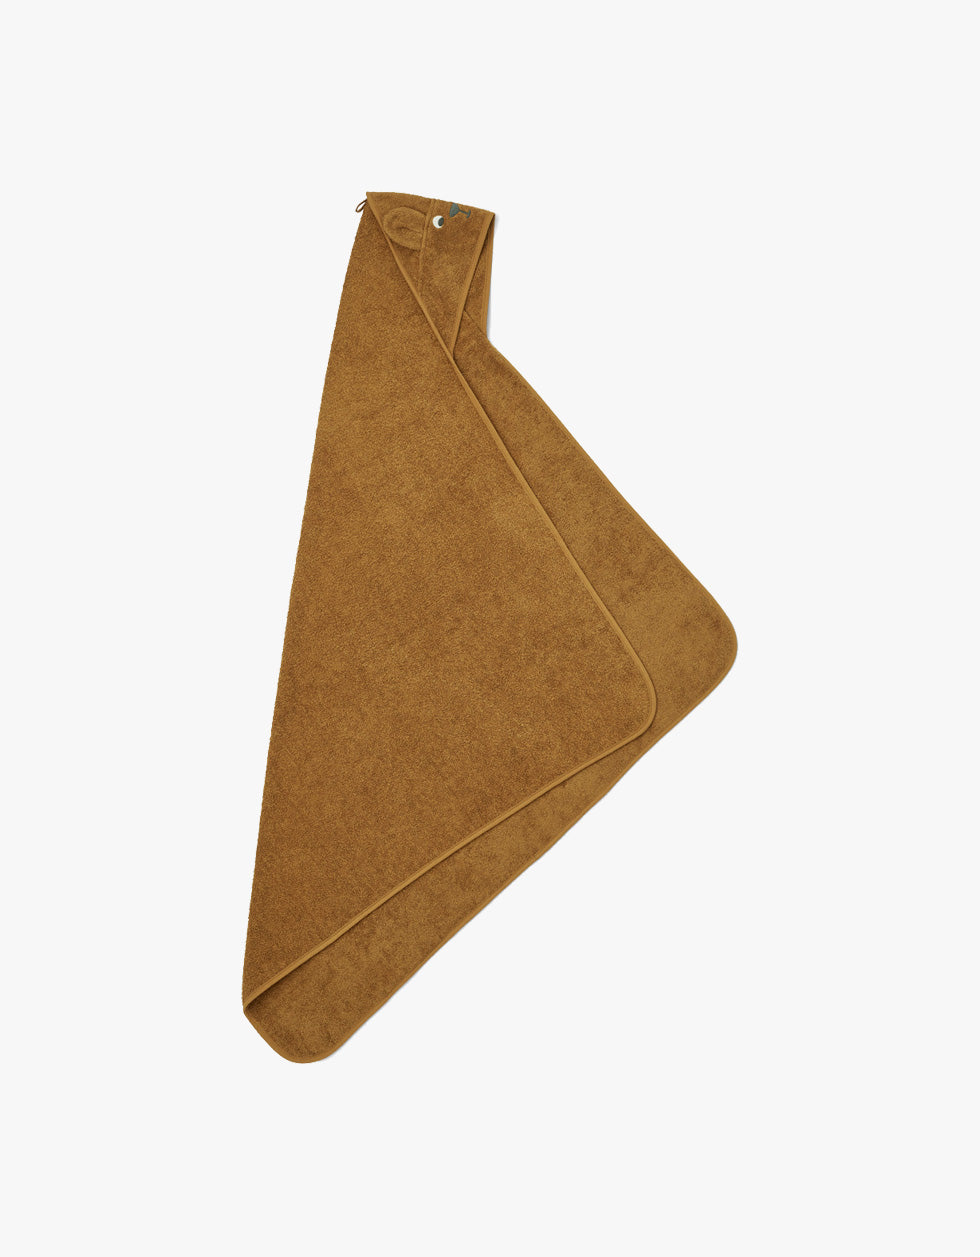 Augusta Hooded Towel - Kangaroo/Golden Caramel